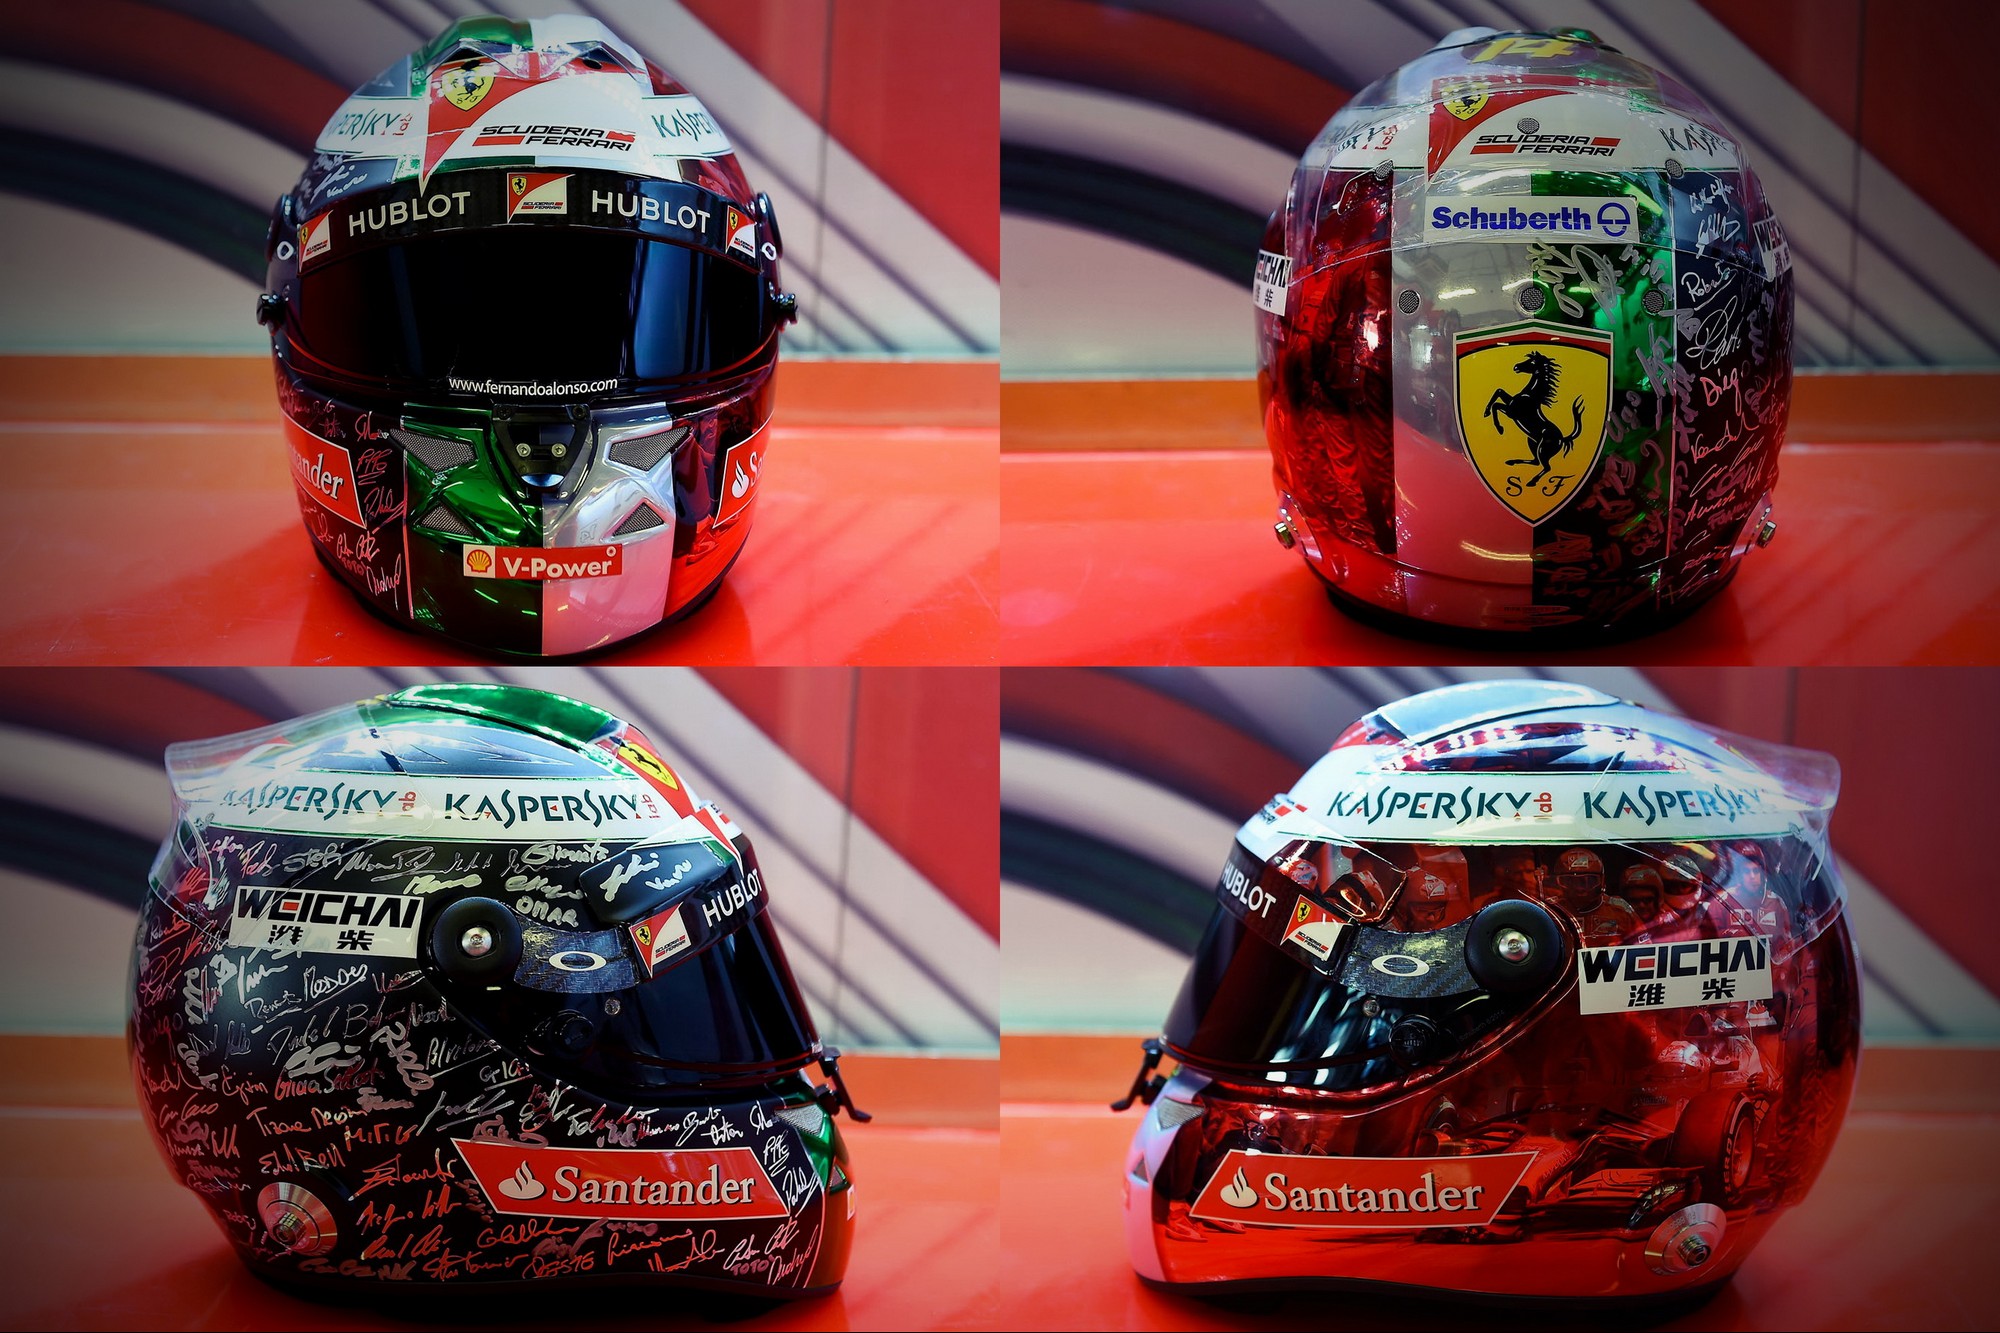 Шлем Фернандо Алонсо на Гран-При Абу-Даби 2014 года | 2014 Abu Dhabi Grand Prix helmet of Fernando Alonso